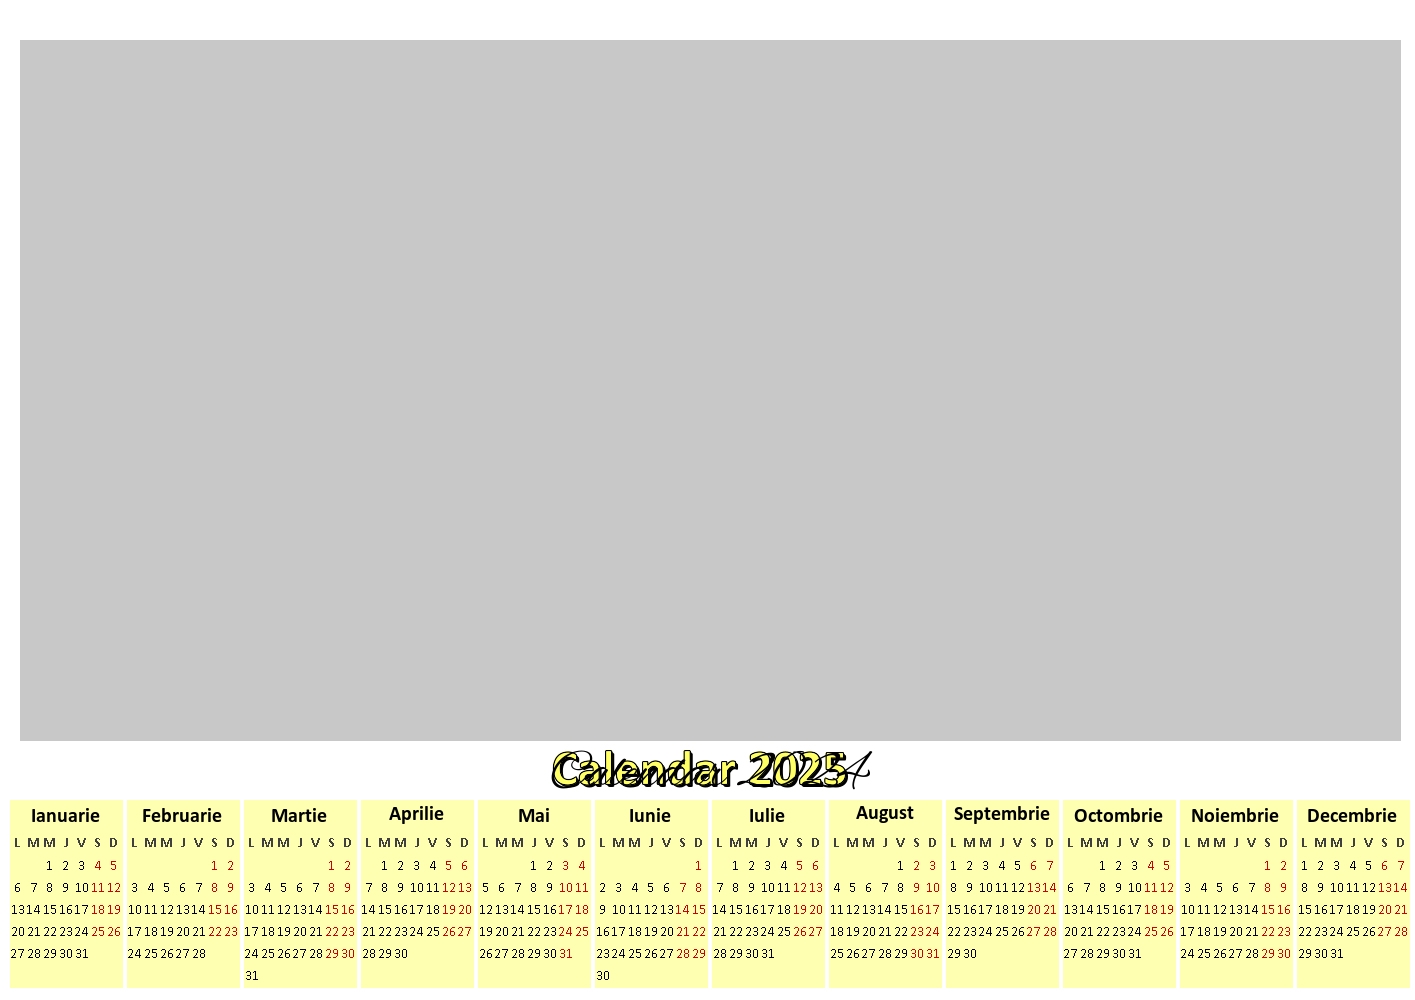 Felicitari personalizate cu calendare - Calendar 2025 clasic cu o poză